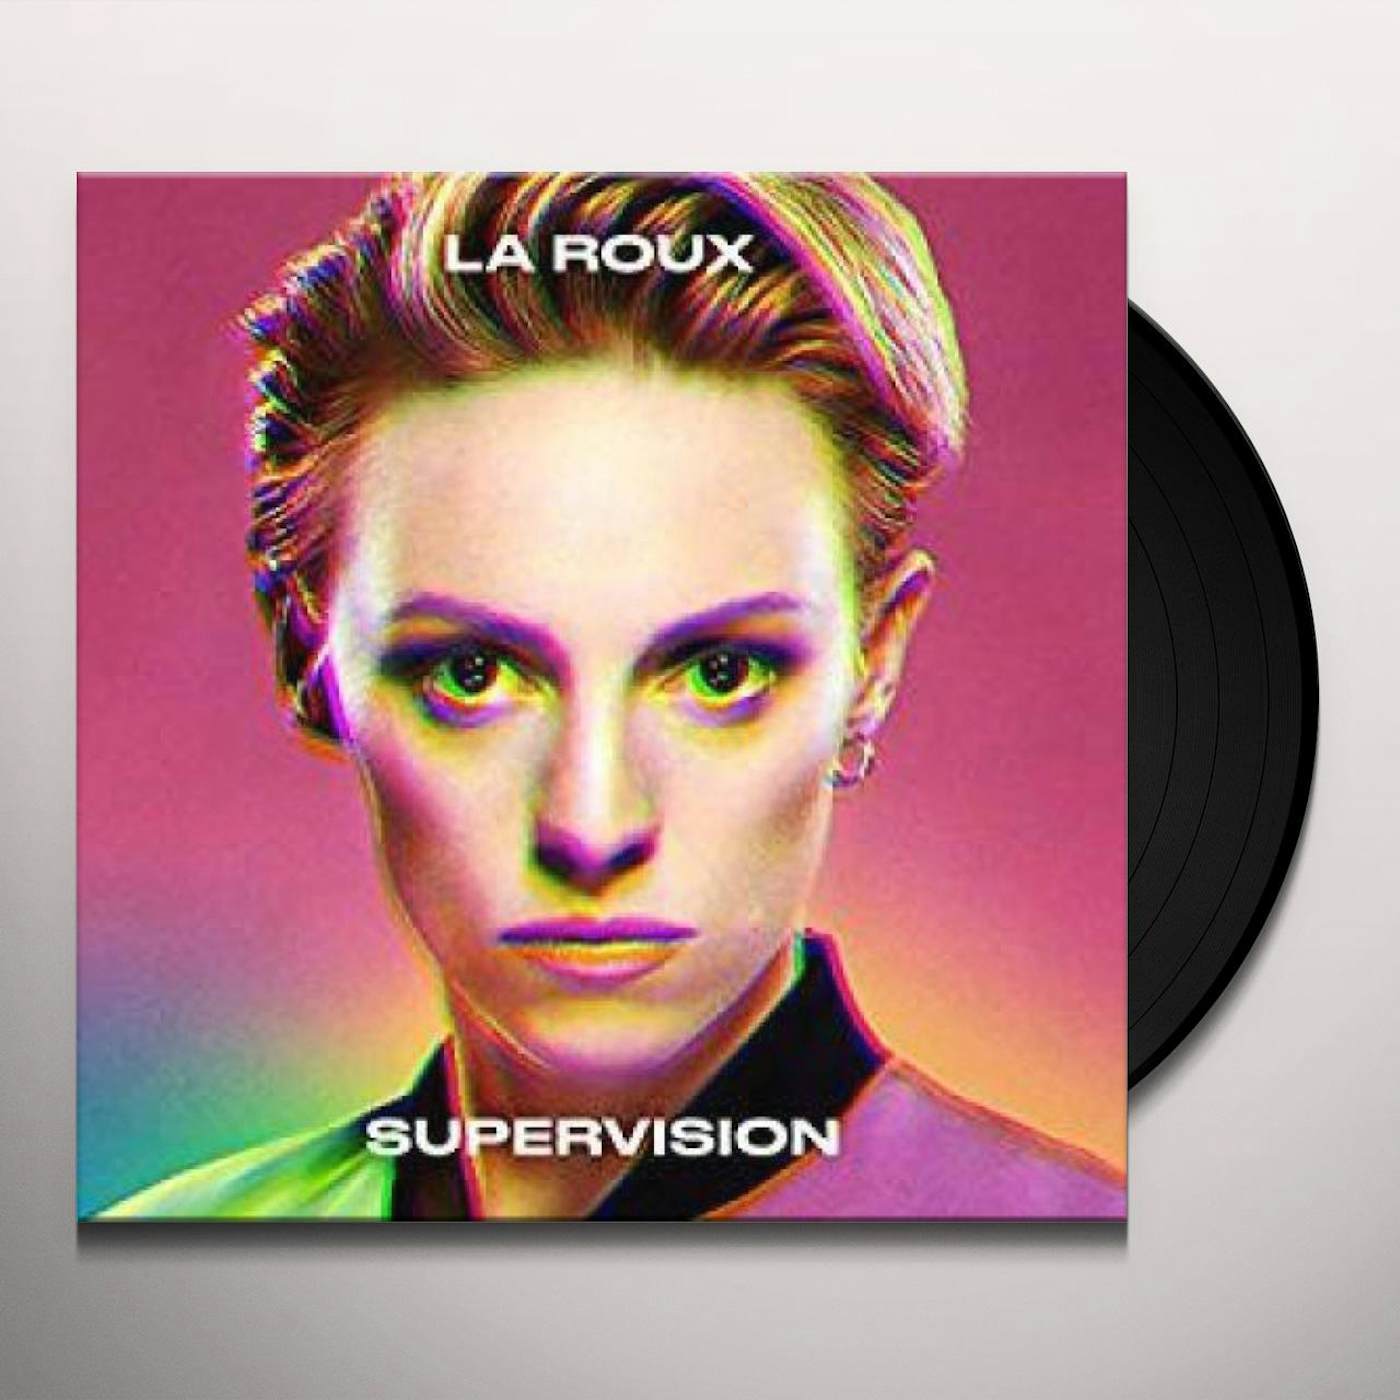 La Roux Supervision Vinyl Record